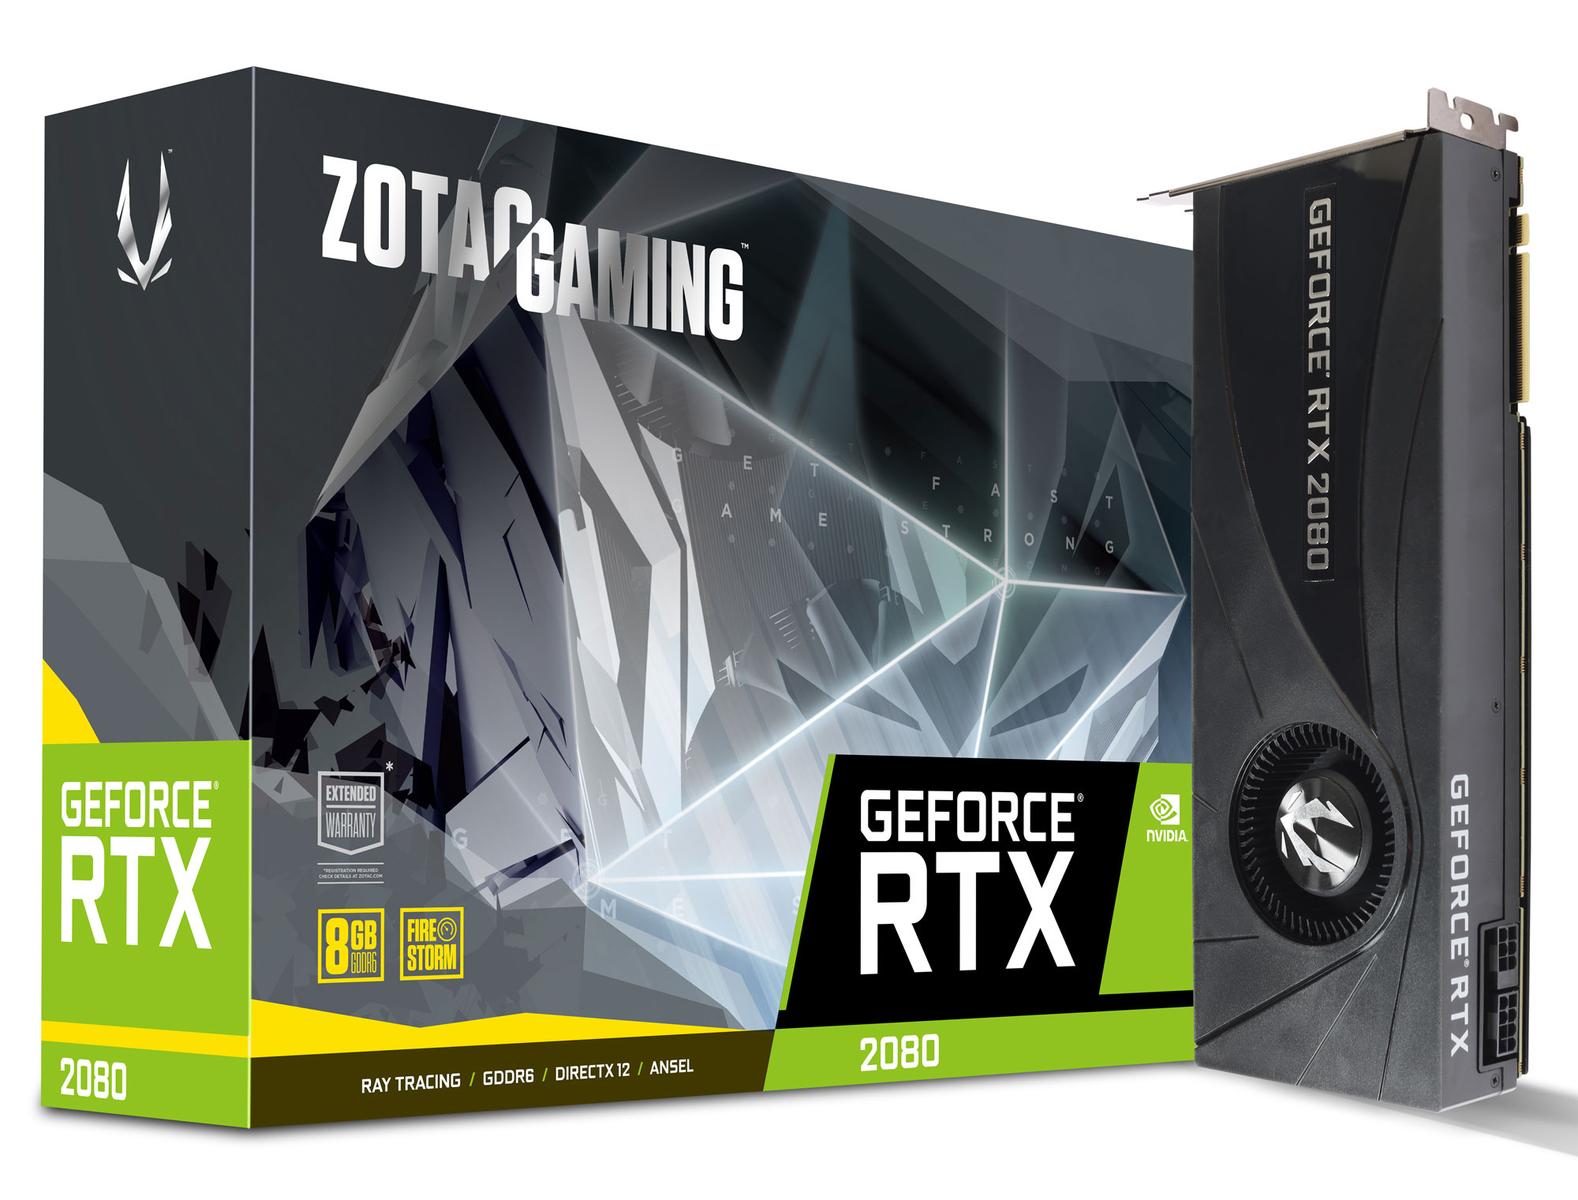 Zotac GeForce RTX 2080 8 GB Gaming